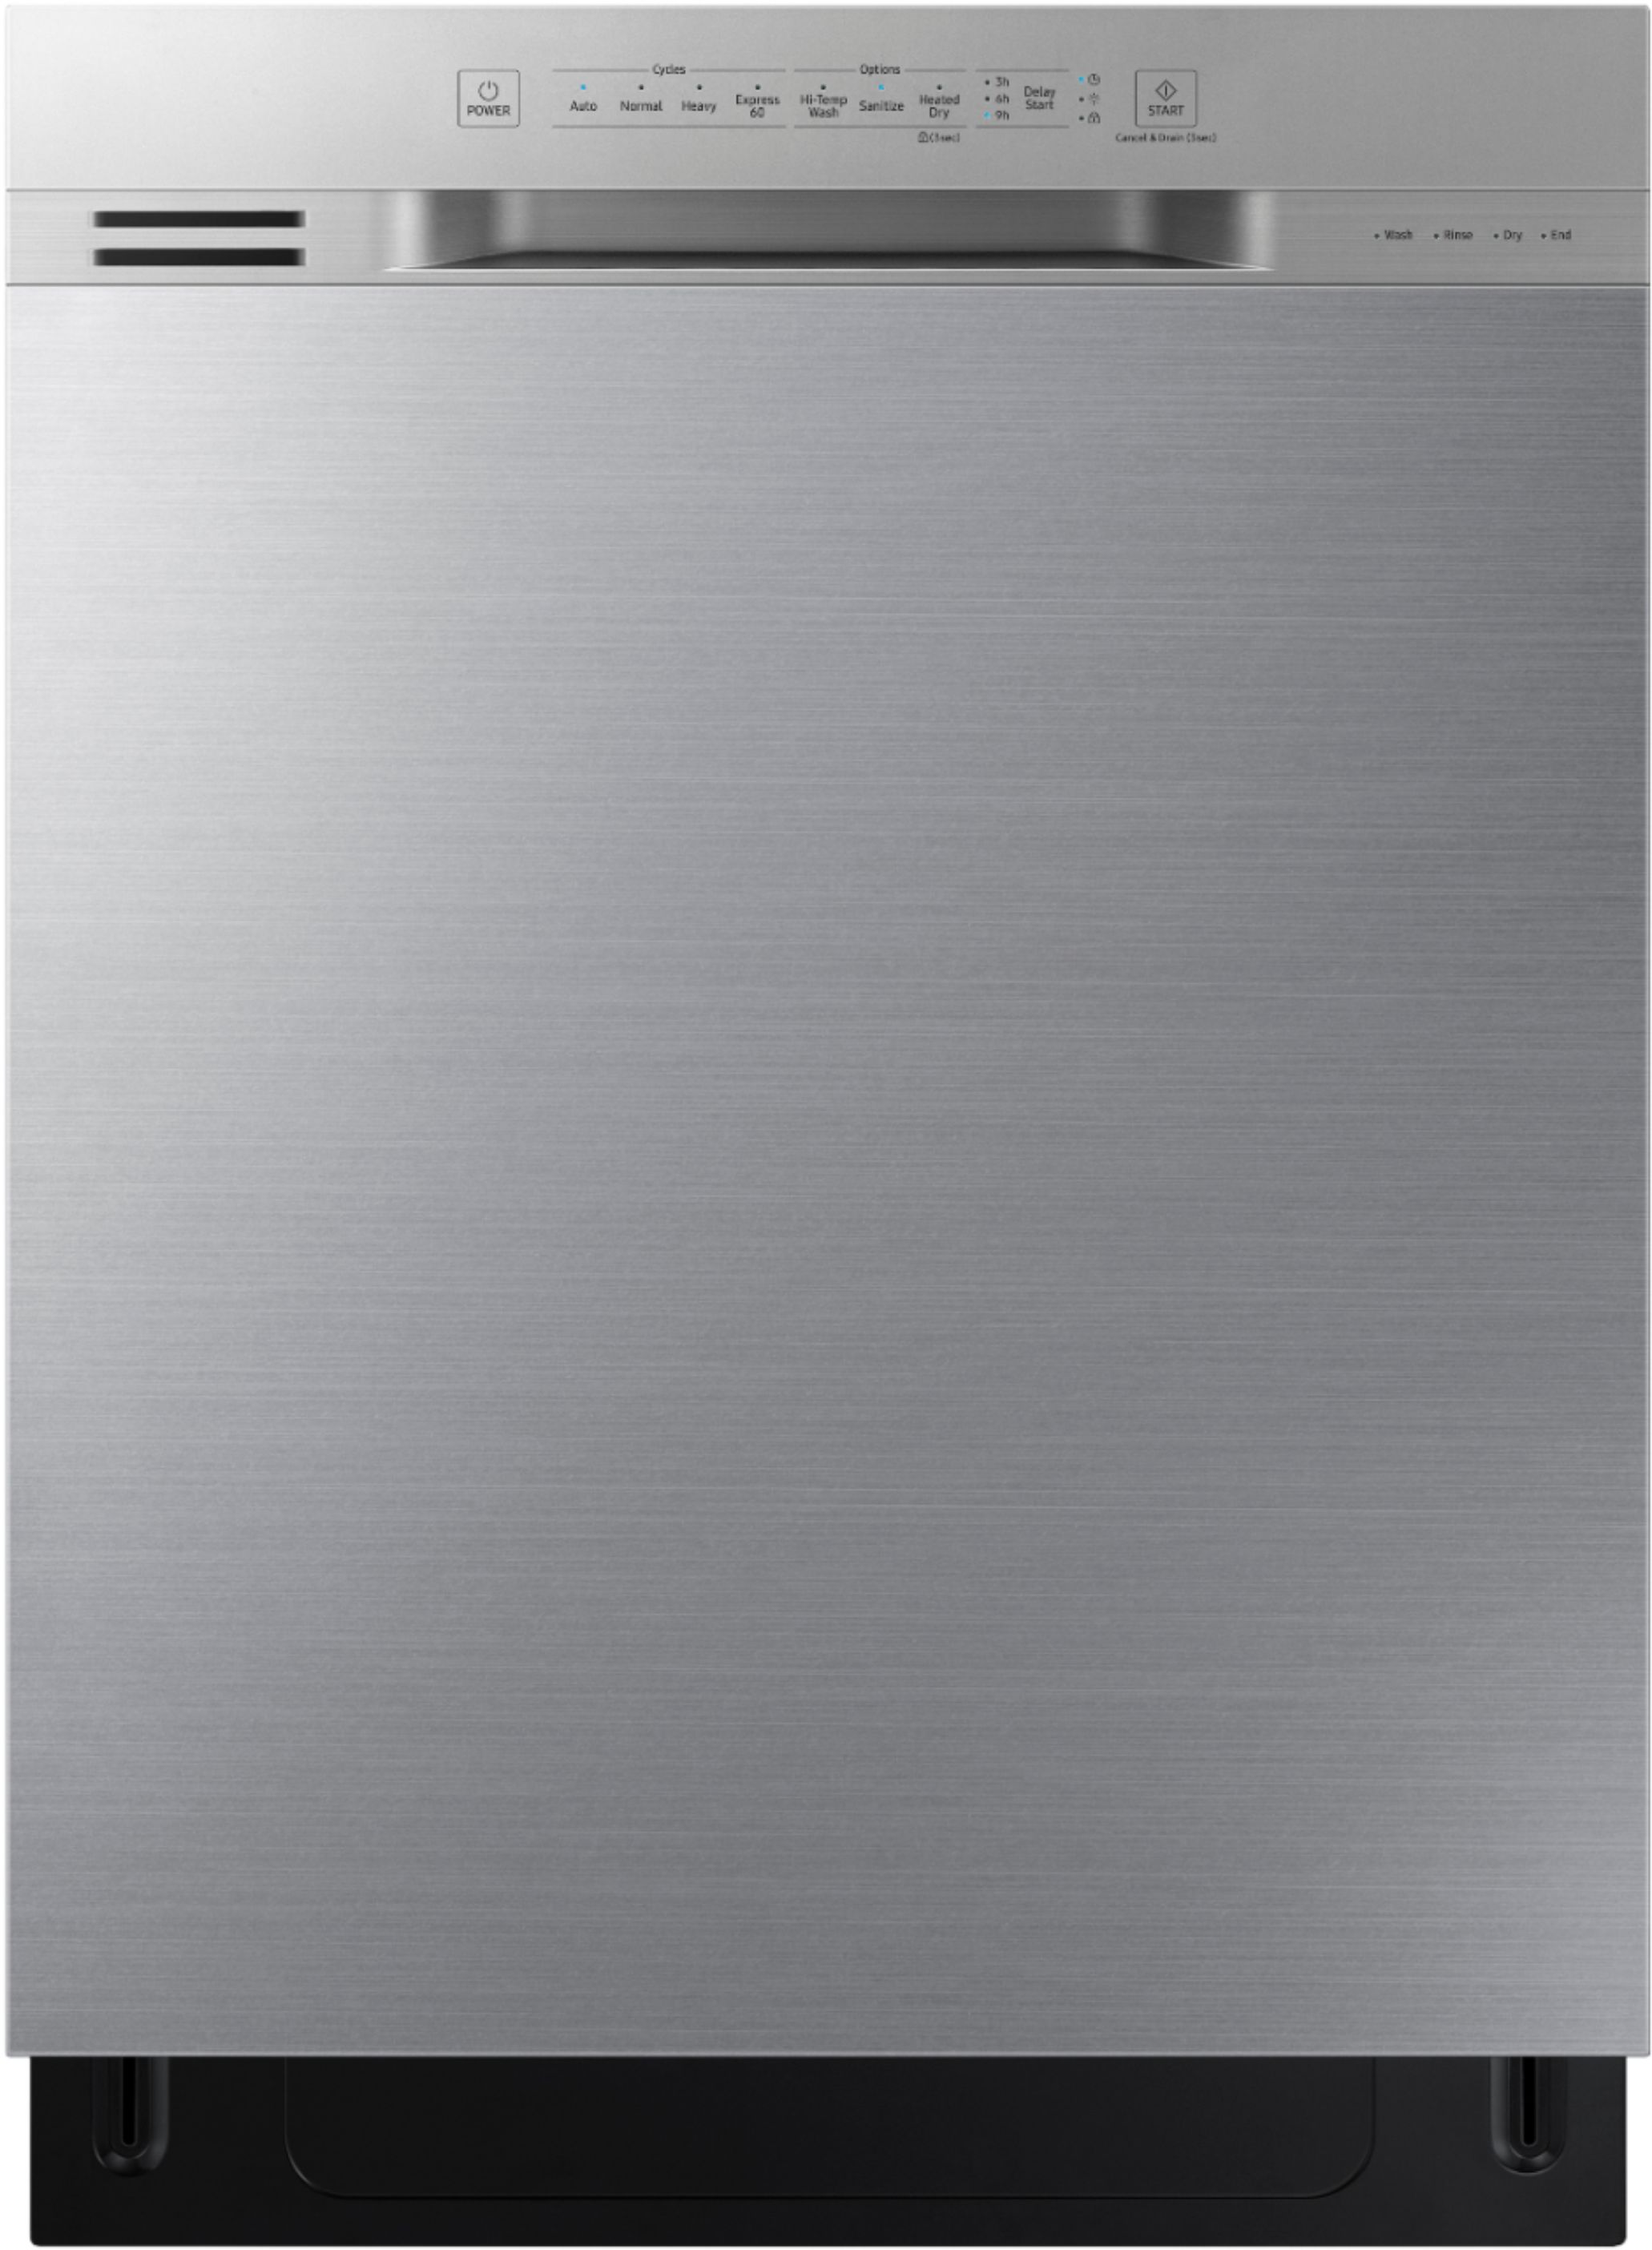 Dishwasher Stainless steel DW80N3030US 